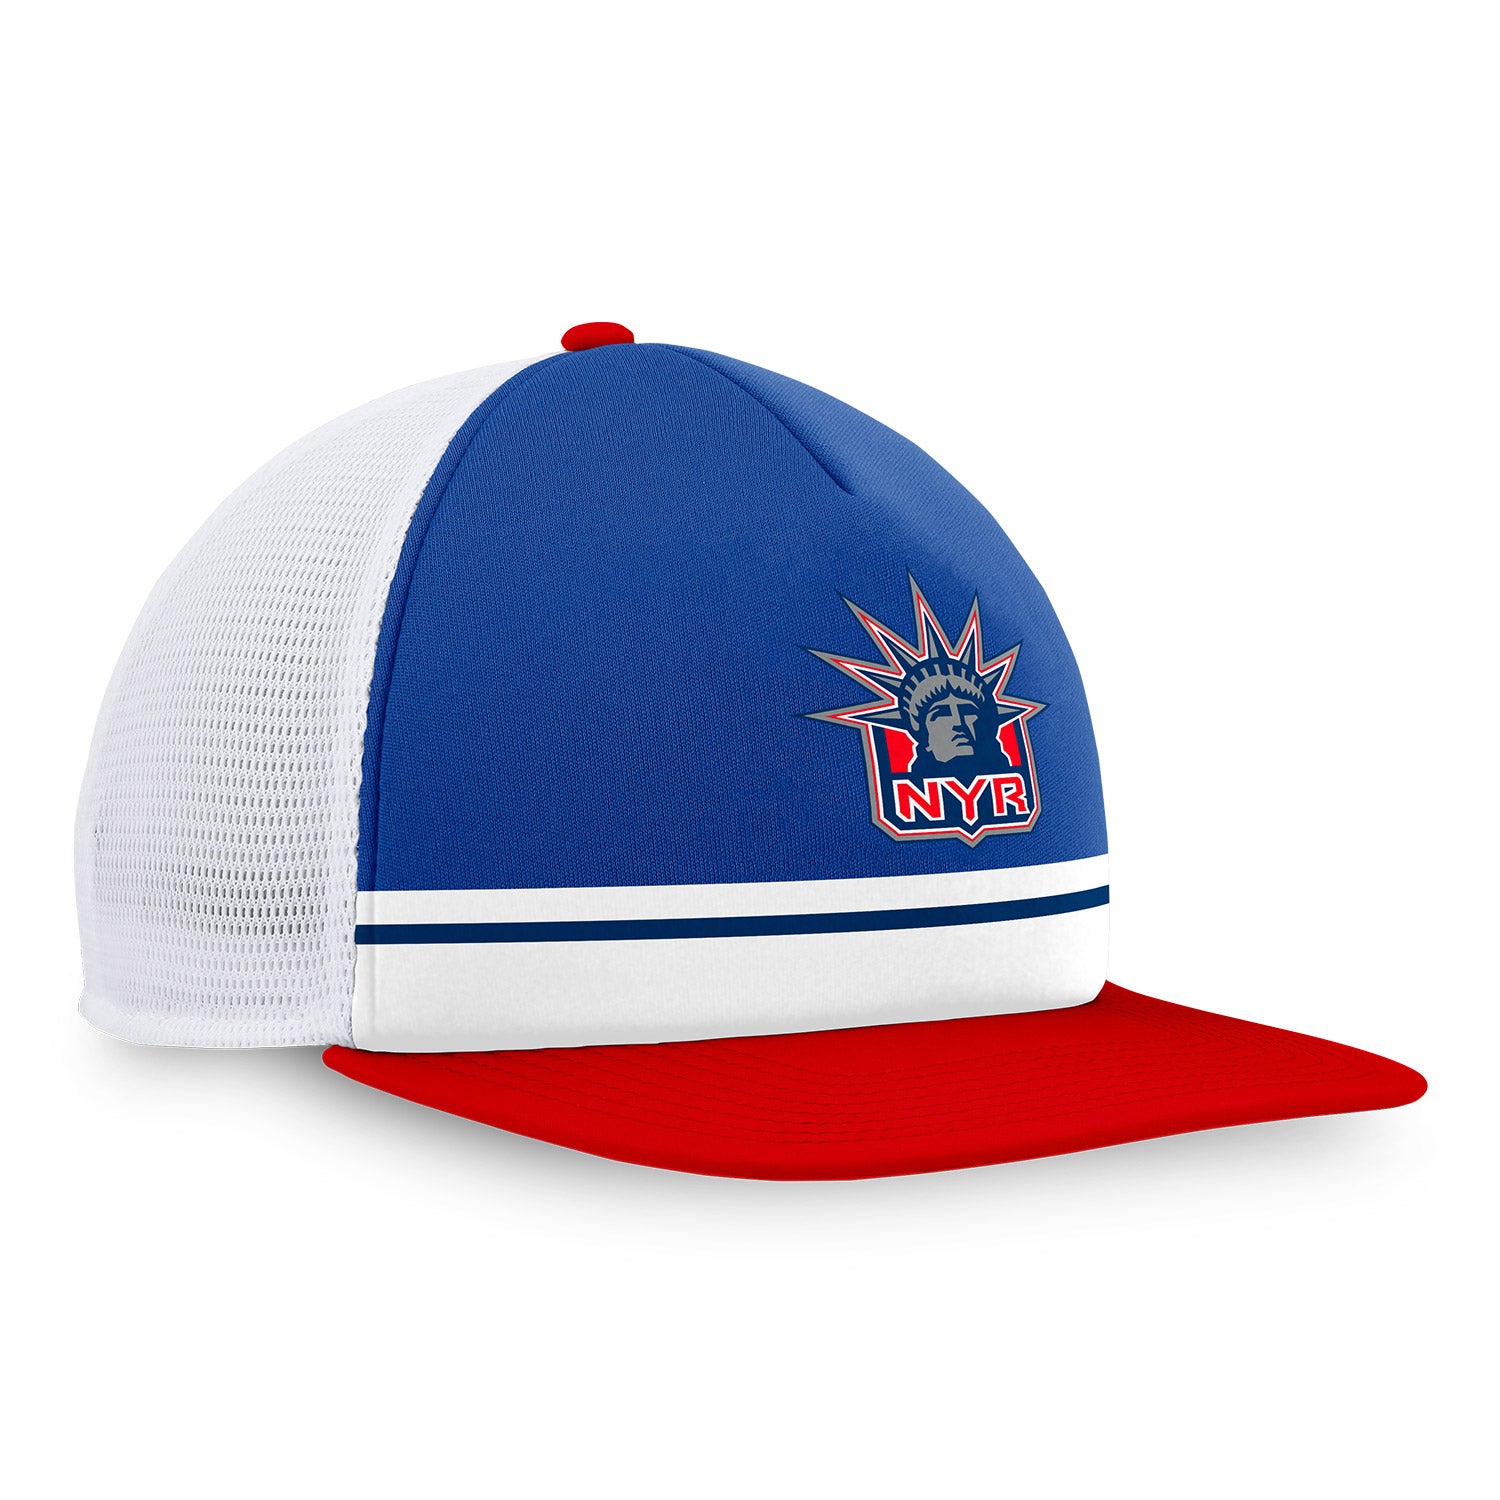 Fanatics Rangers 23 Authentic Pro Draft Podium Trucker Hat